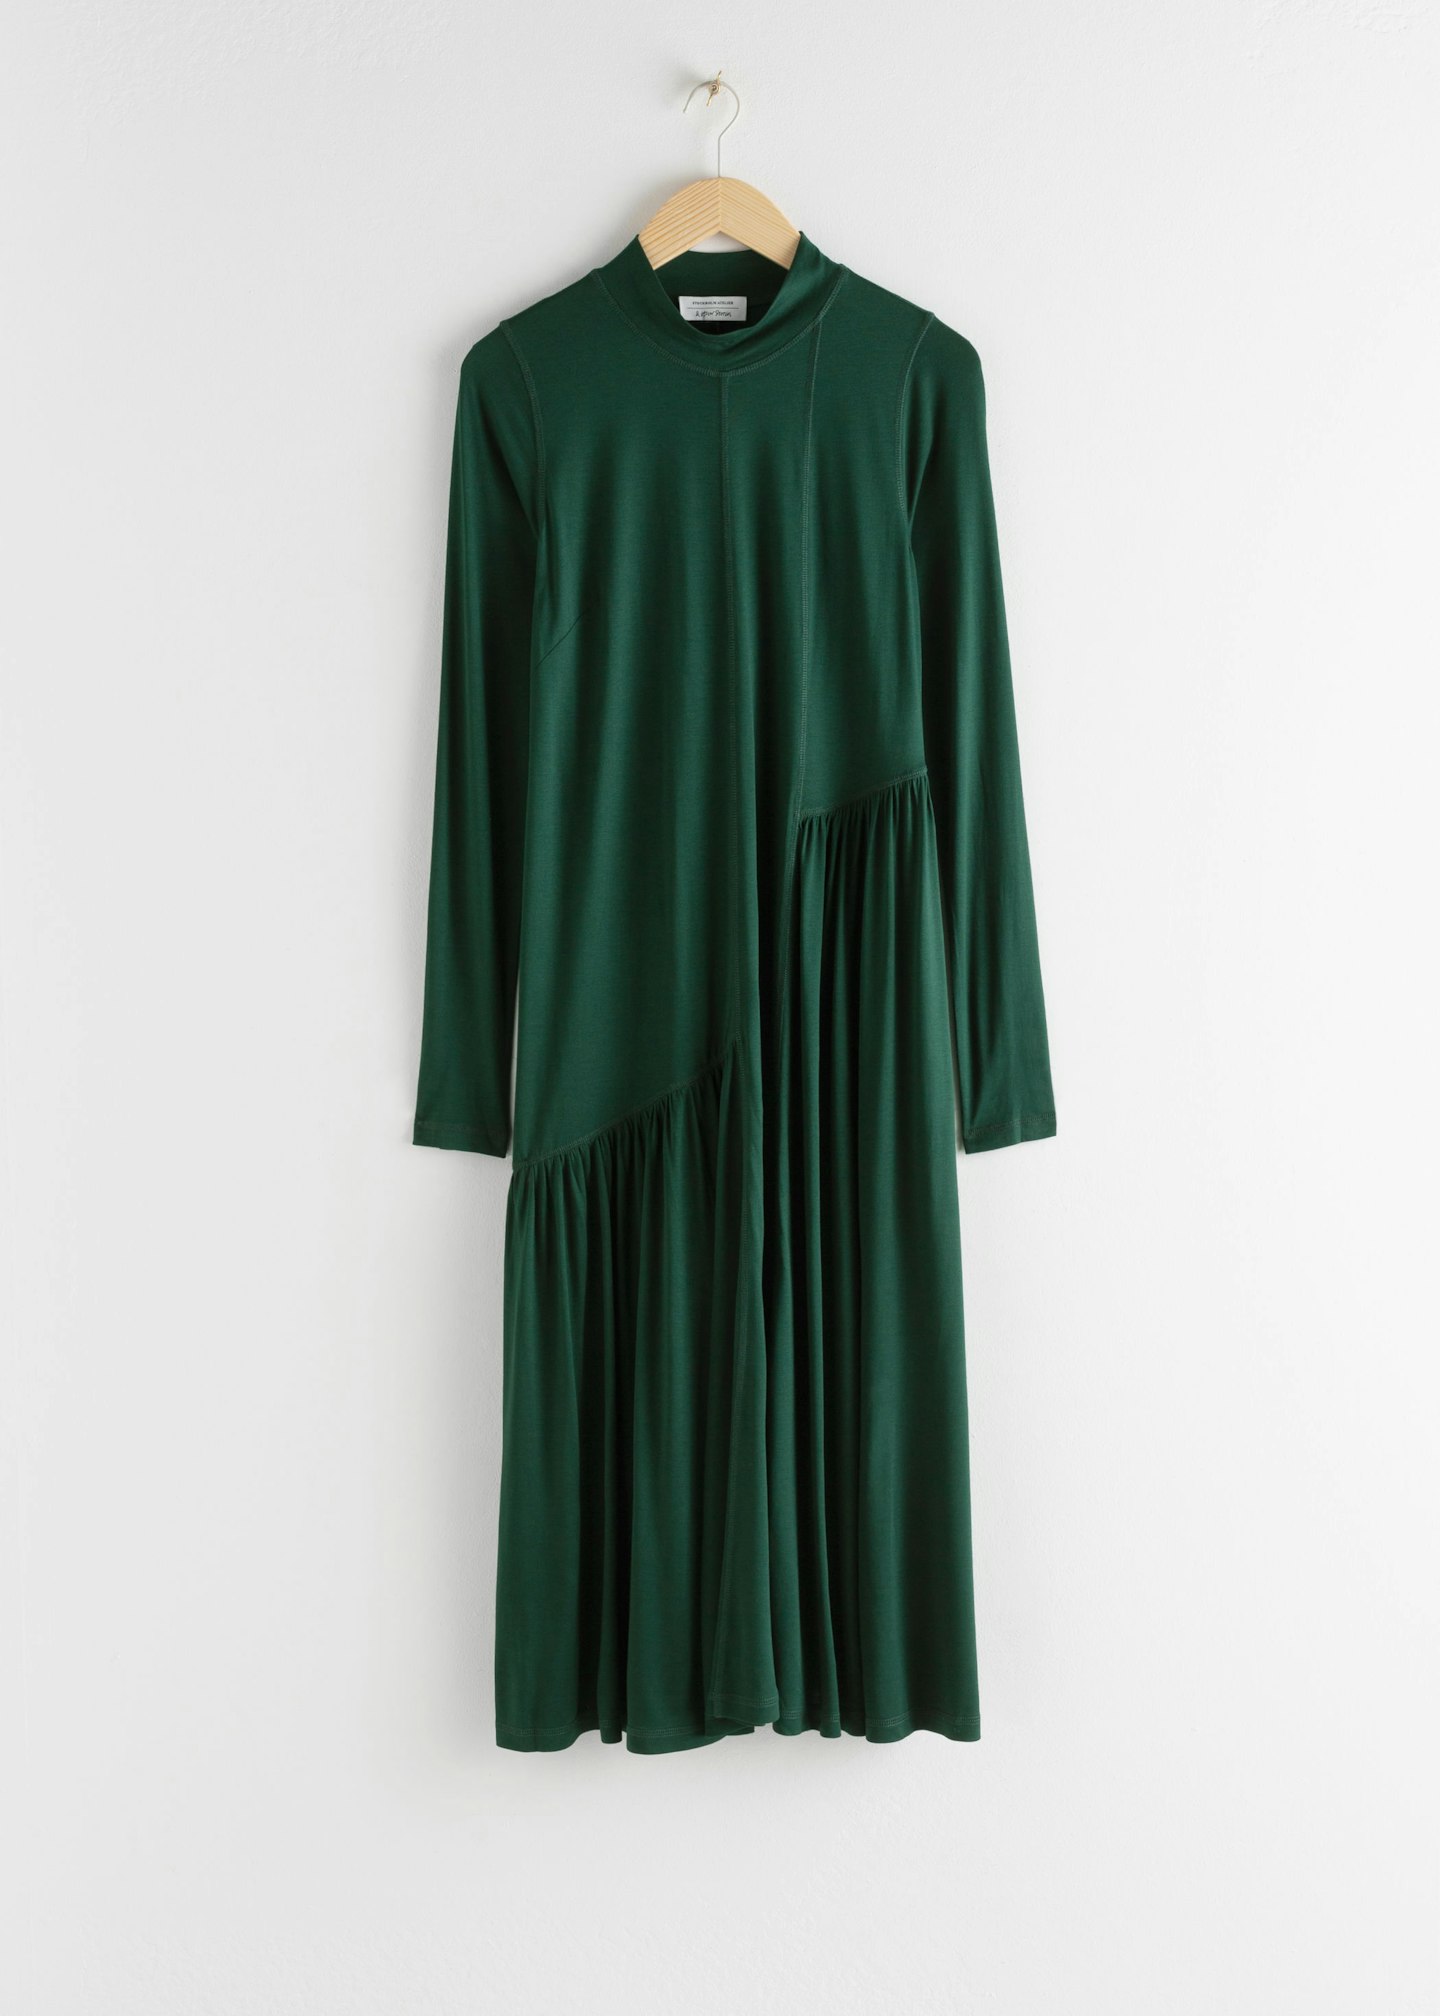 & Other Stories, Asymmetric Midi Dress, £55